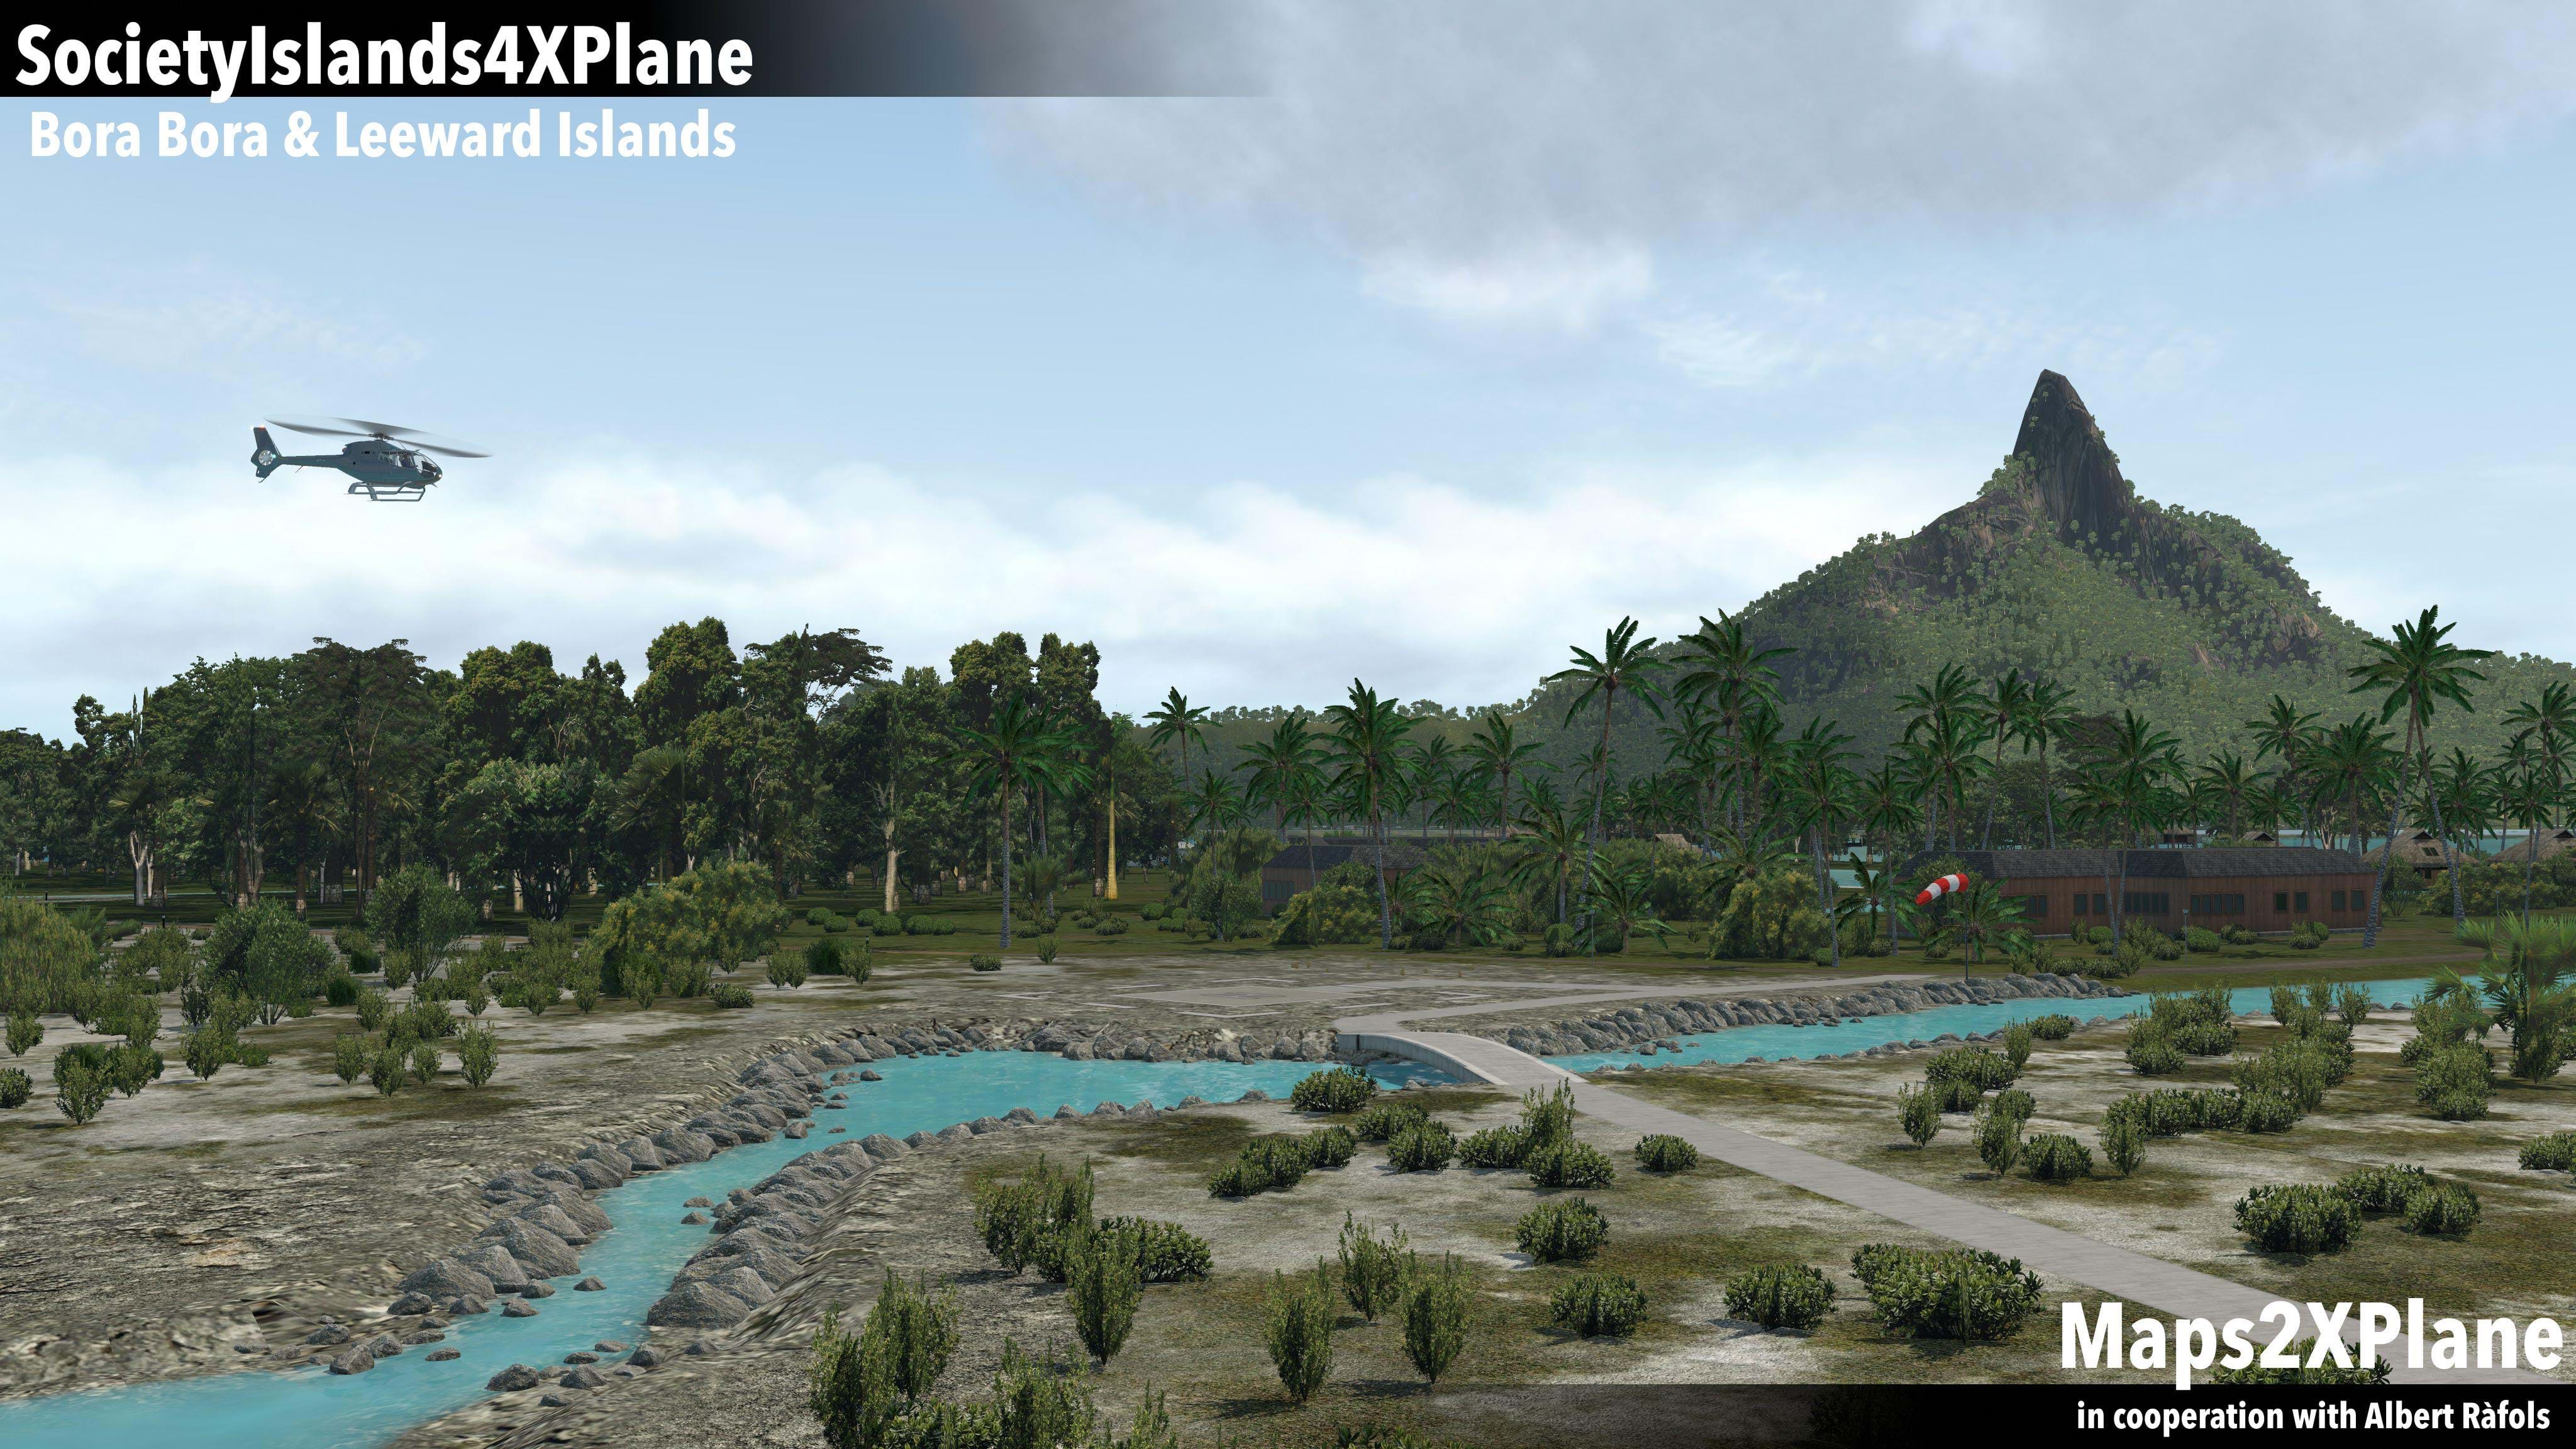 Maps2XPlane’s Society Islands XP - Bora Bora & Leeward Islands for X-Plane